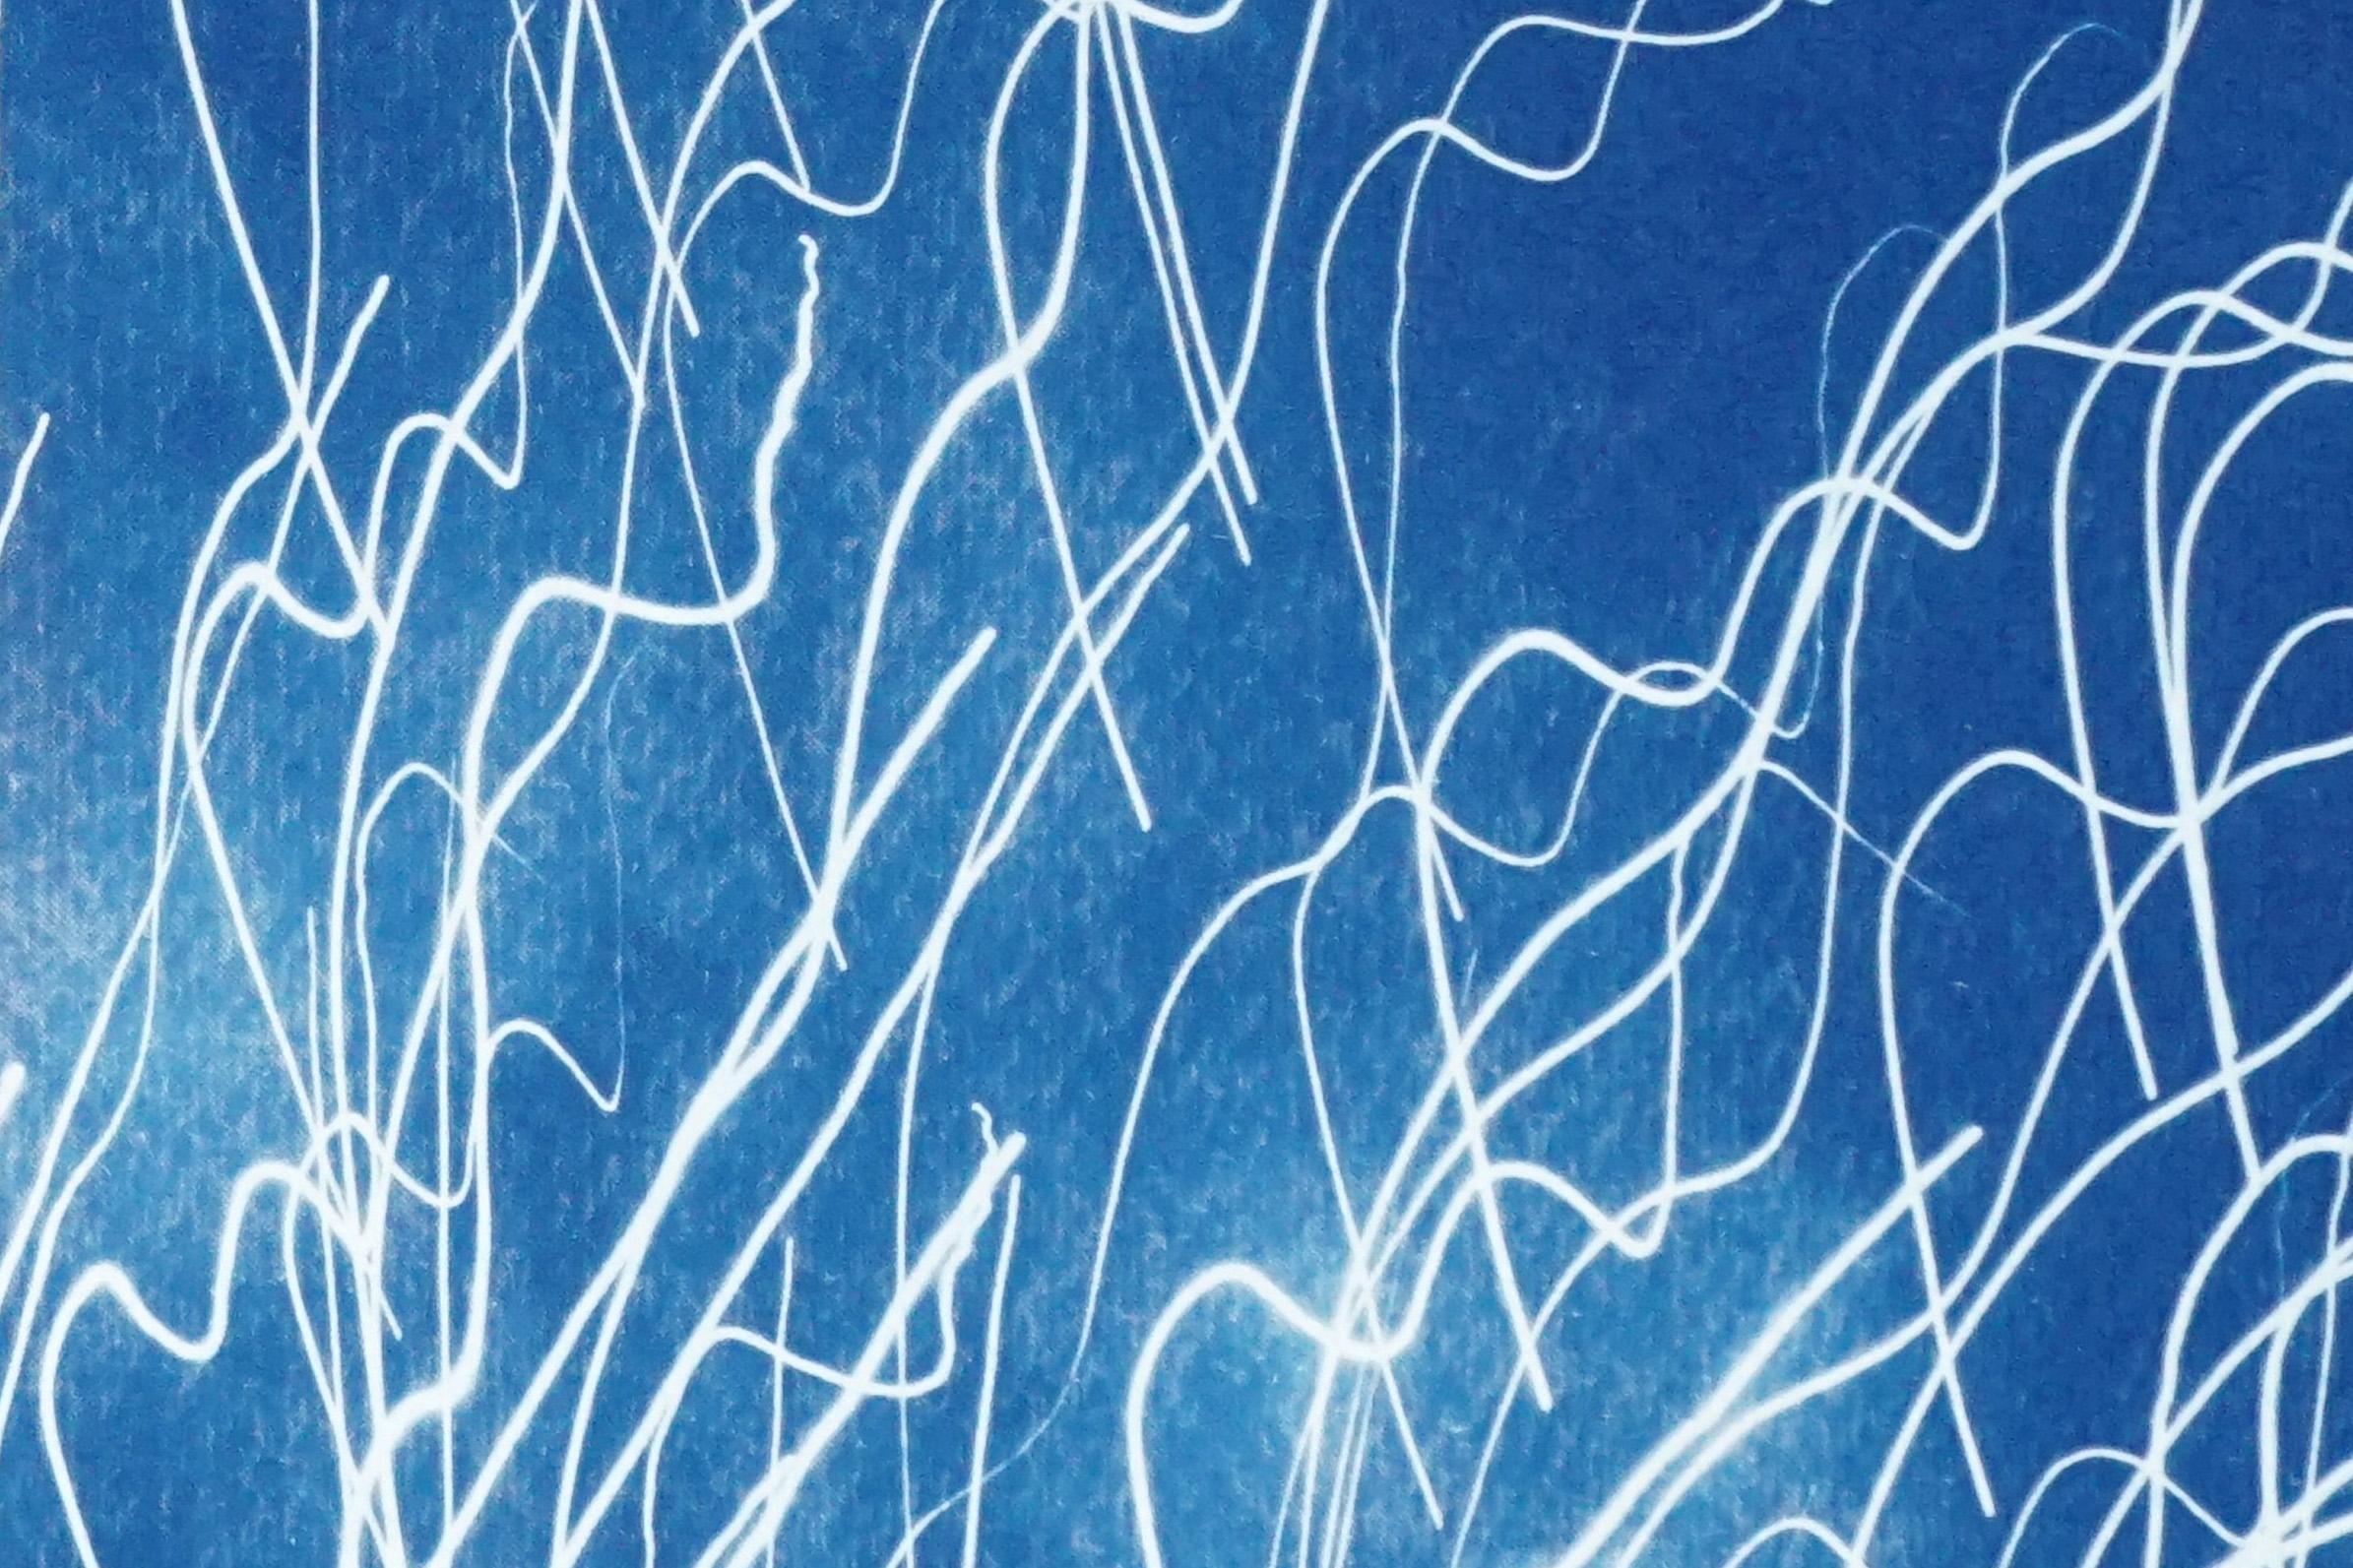 Fireworks Lights in Sky Blue Diptych, Handmade Cyanotype on Watercolor Paper,  3